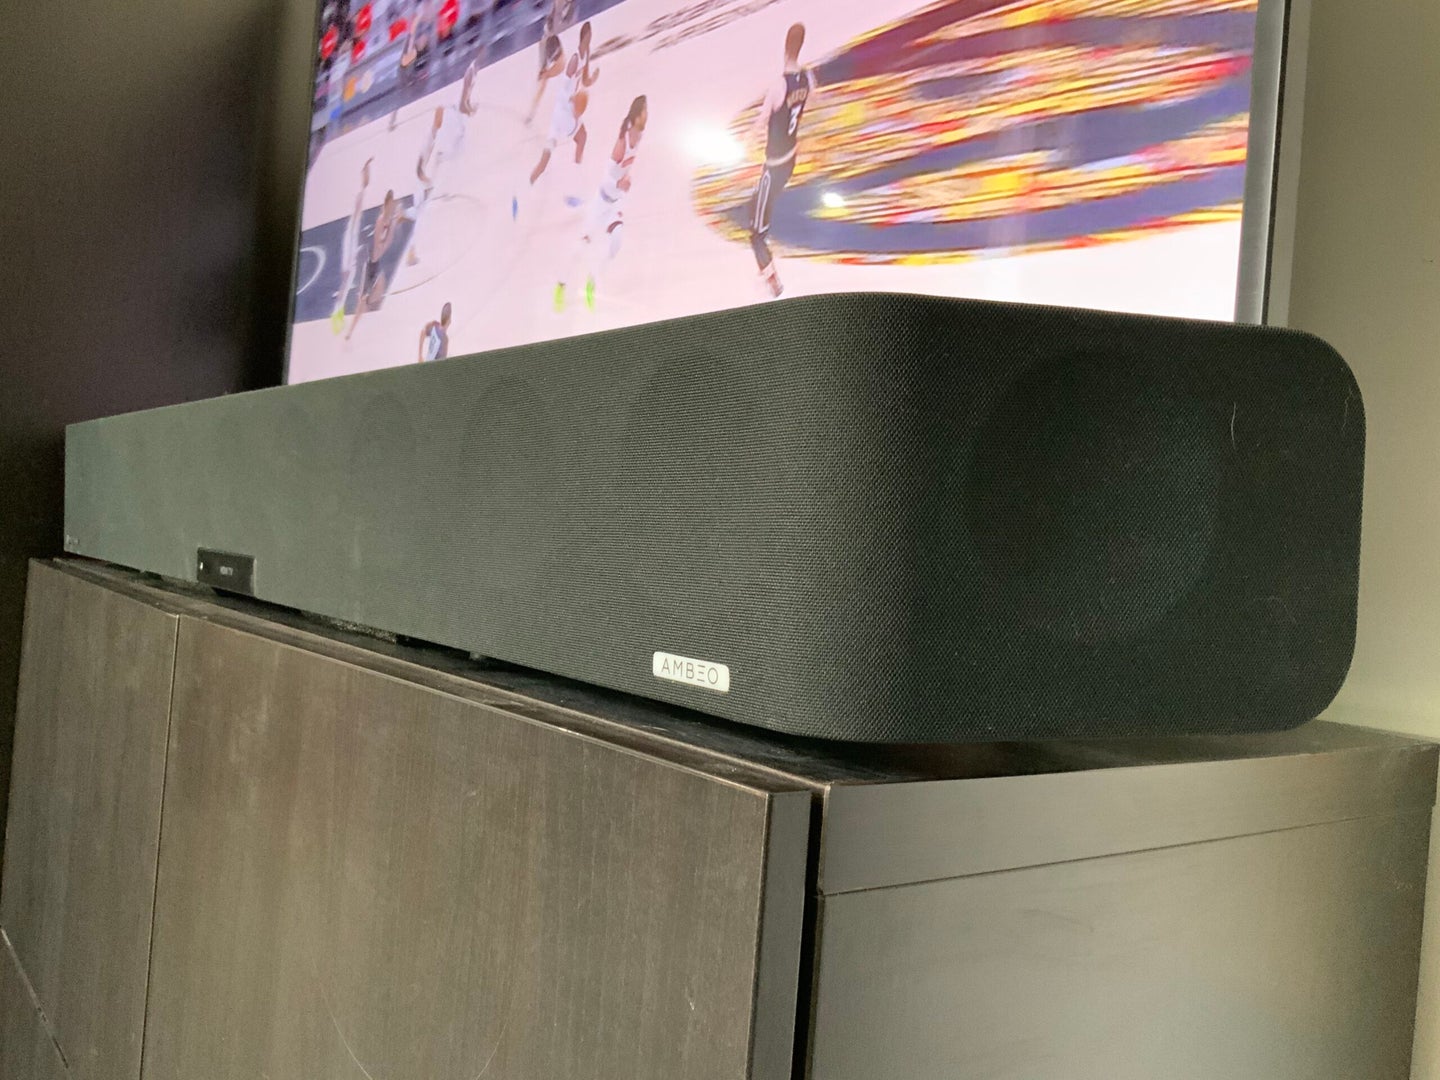 The Sennheiser AMBEO Soundbar in front of a flatscreen TV